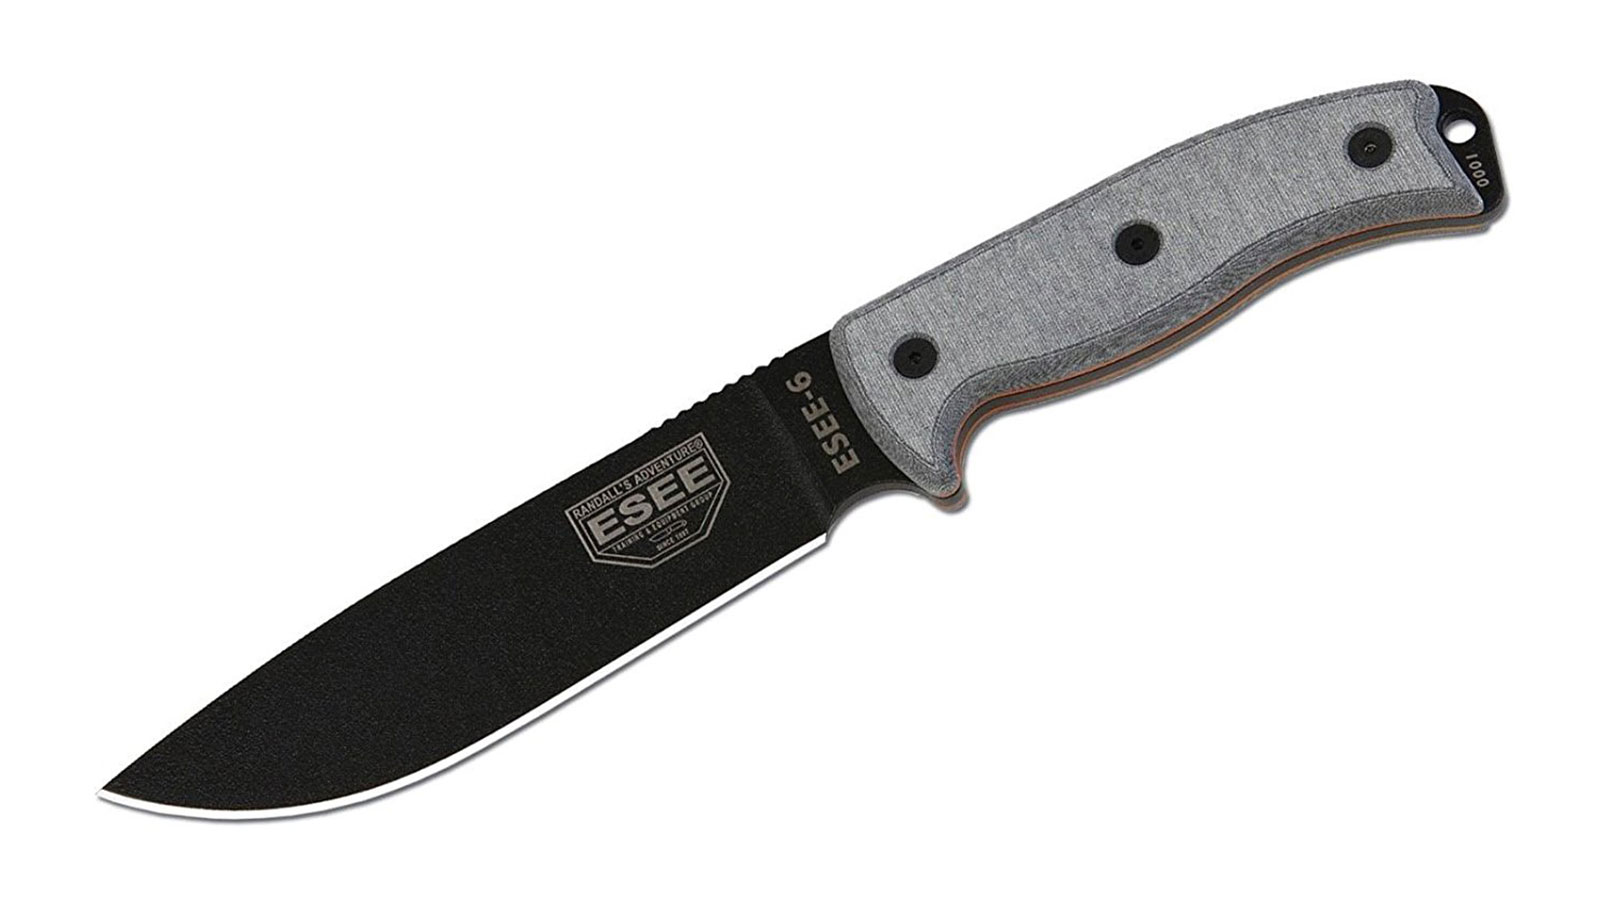 ESEE 6P-B Plain Edge Fixed Blade Survival Knife | best survival knives